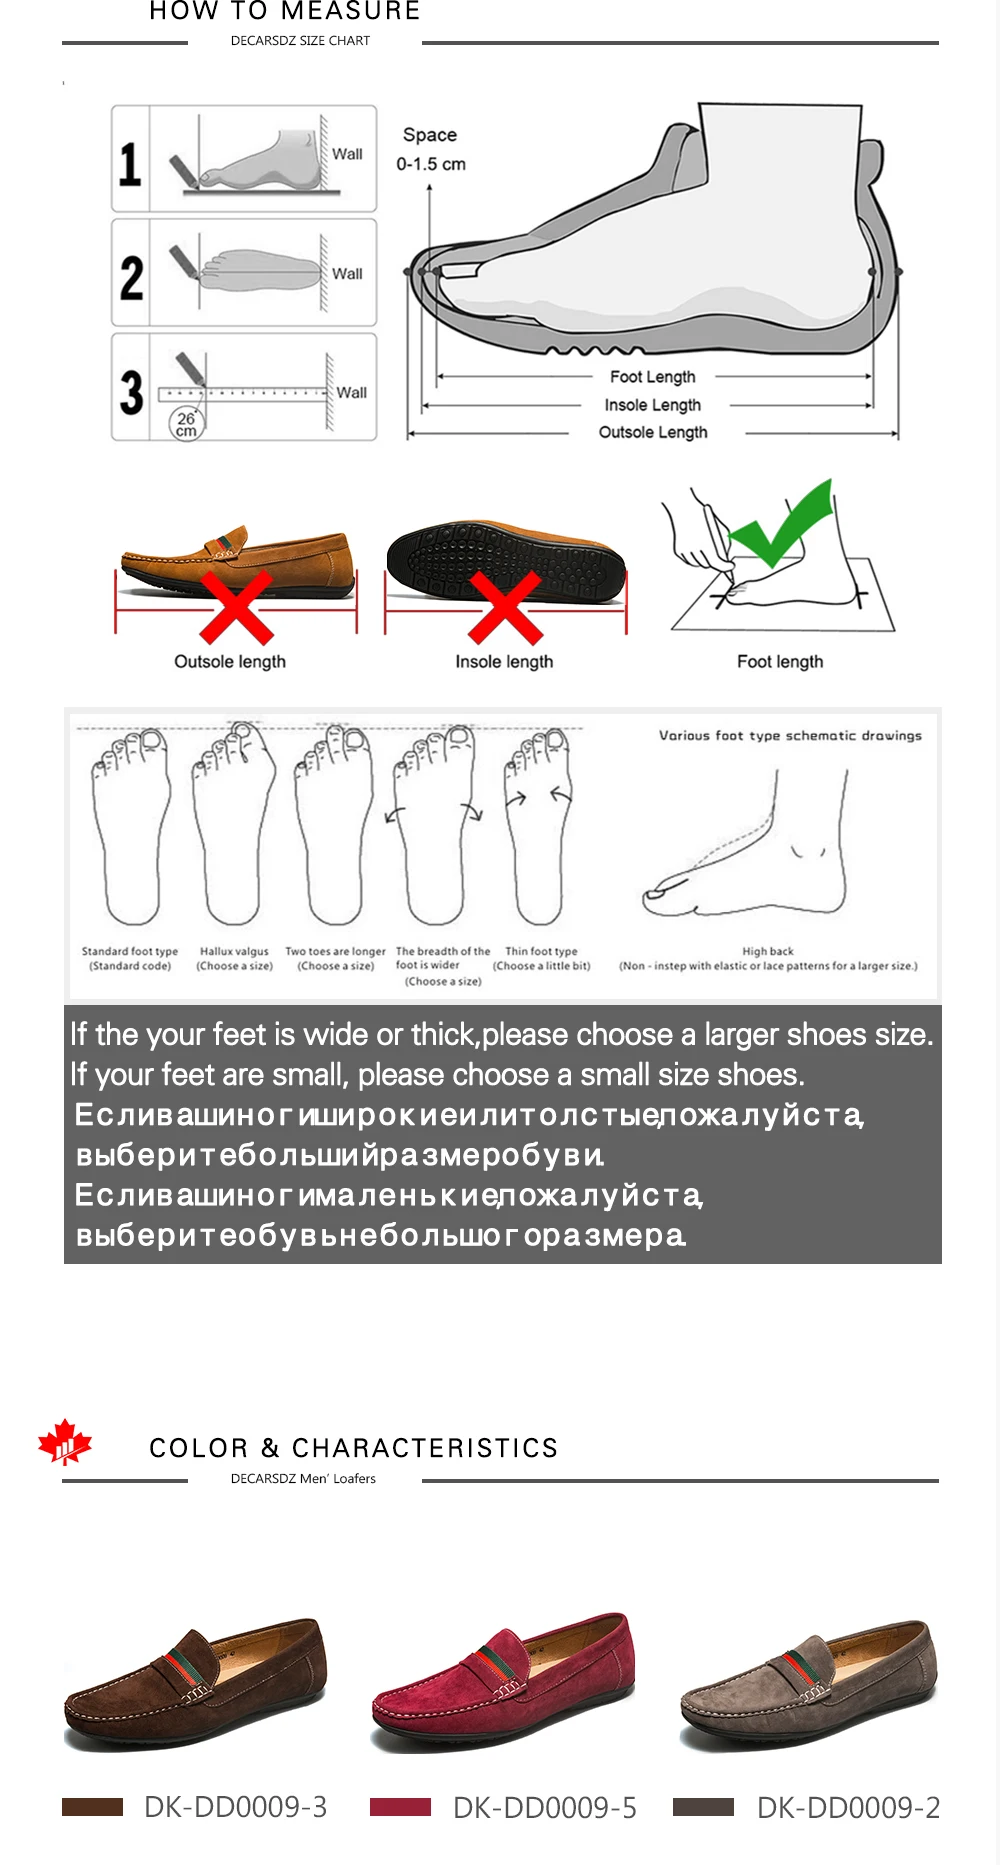 Hc5601a4a2f144e8eac327f8437c7476dv Men Loafers shoes 2020 Autumn Fashion Moccasins Footwear Suede Slip-On Brand Men's Shoes Men Leisure Walking Men's Casual Shoes